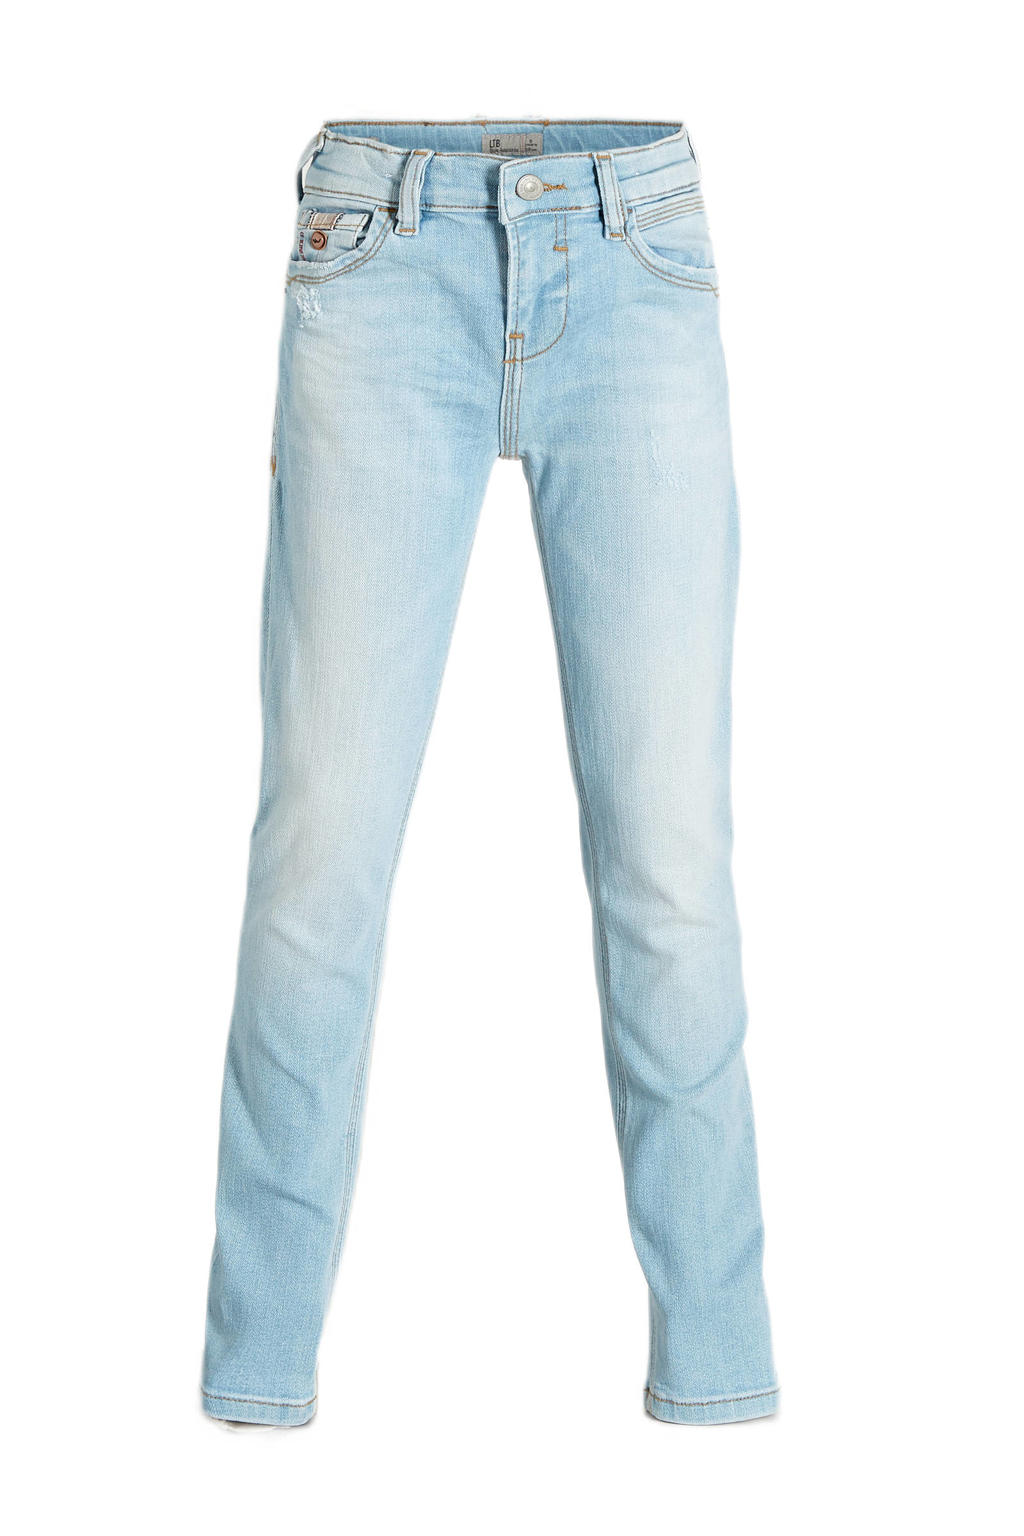 Lichtblauwe jongens LTB skinny jeans Cayle van stretchdenim met regular waist en rits- en knoopsluiting